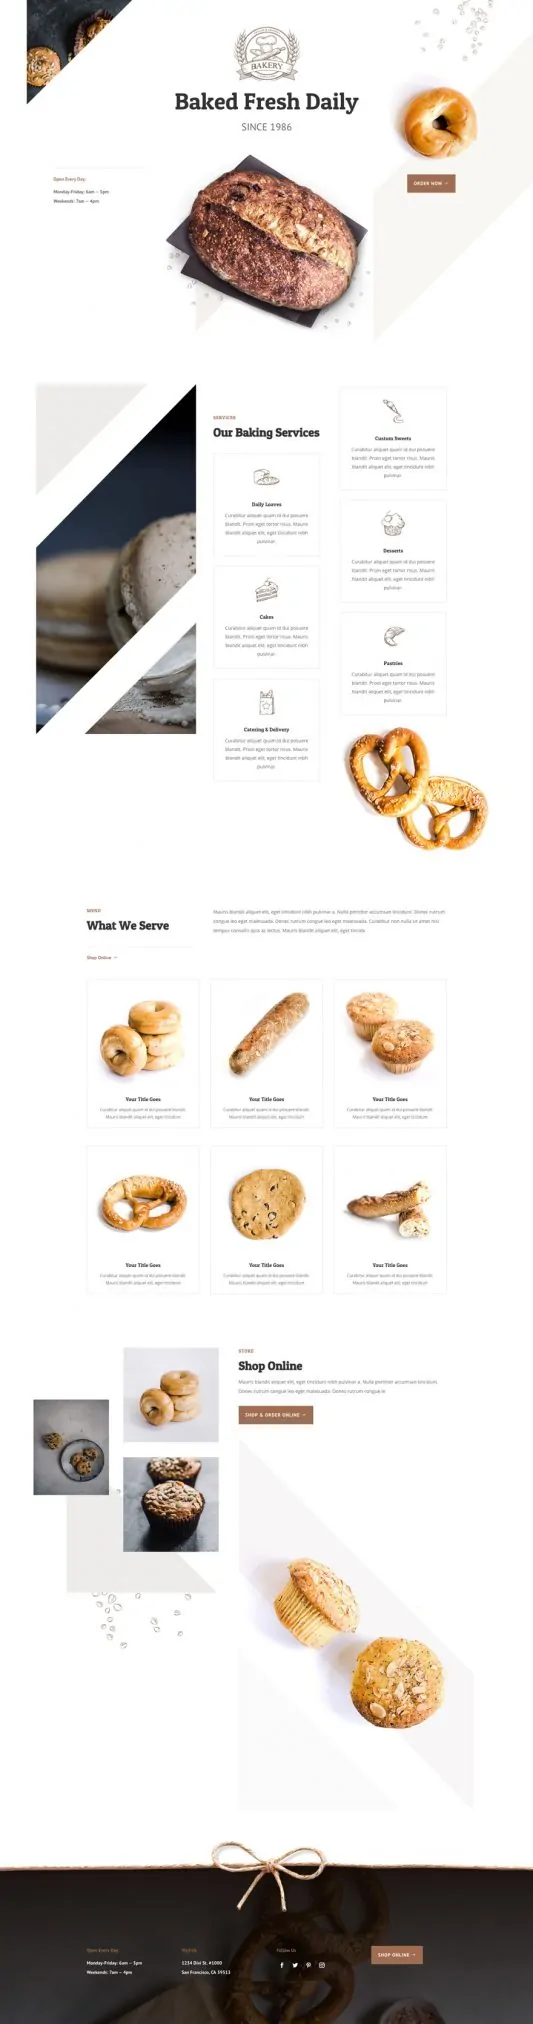 Bakery Web Design 2